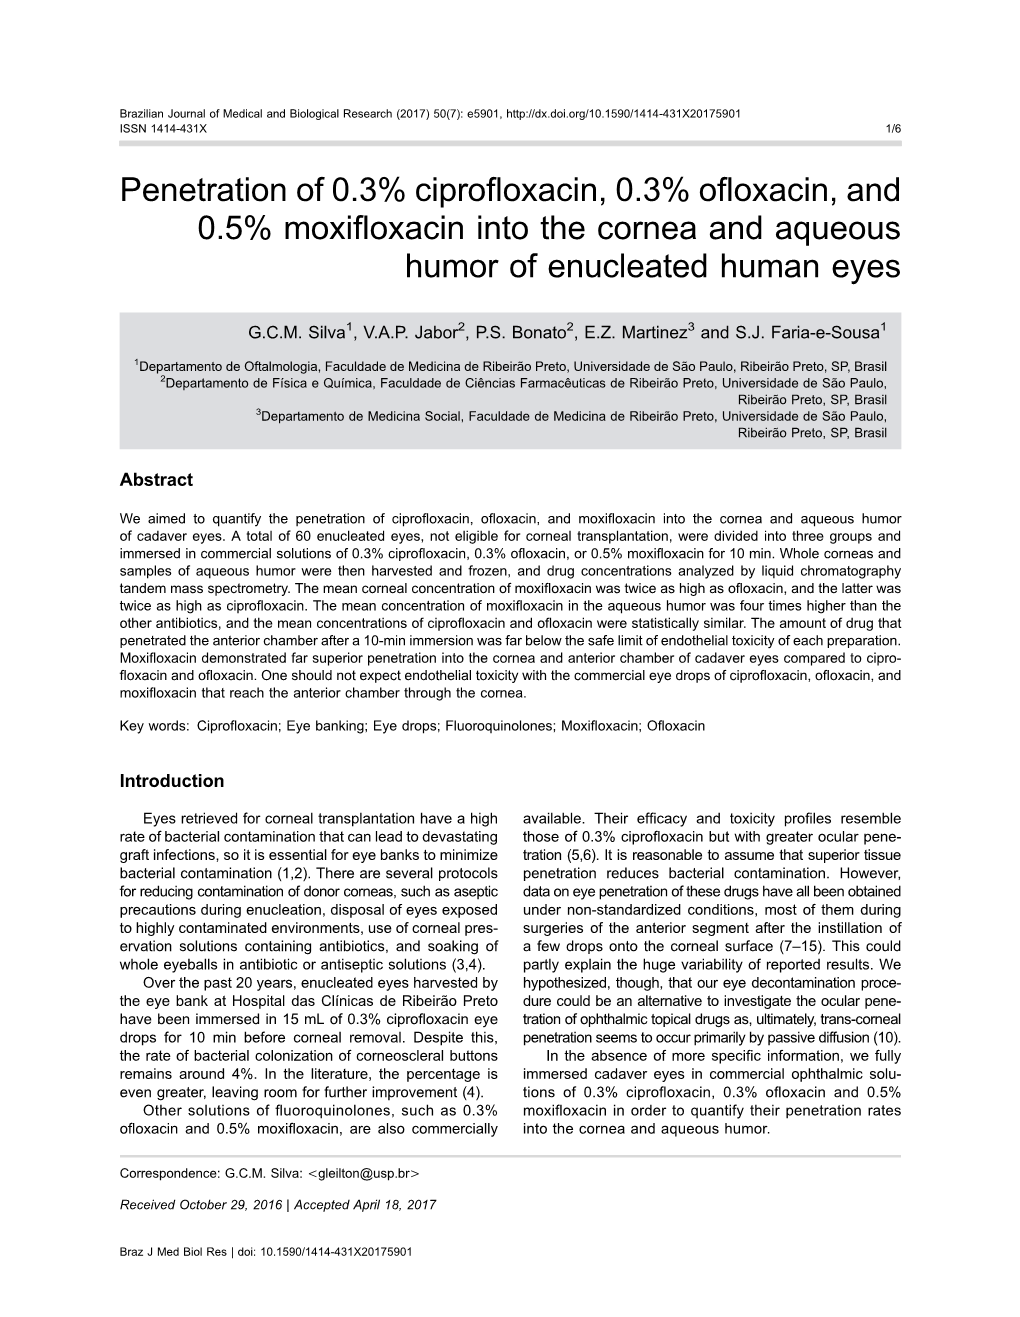 Penetration of 0.3% Ciprofloxacin, 0.3% Ofloxacin, and 0.5